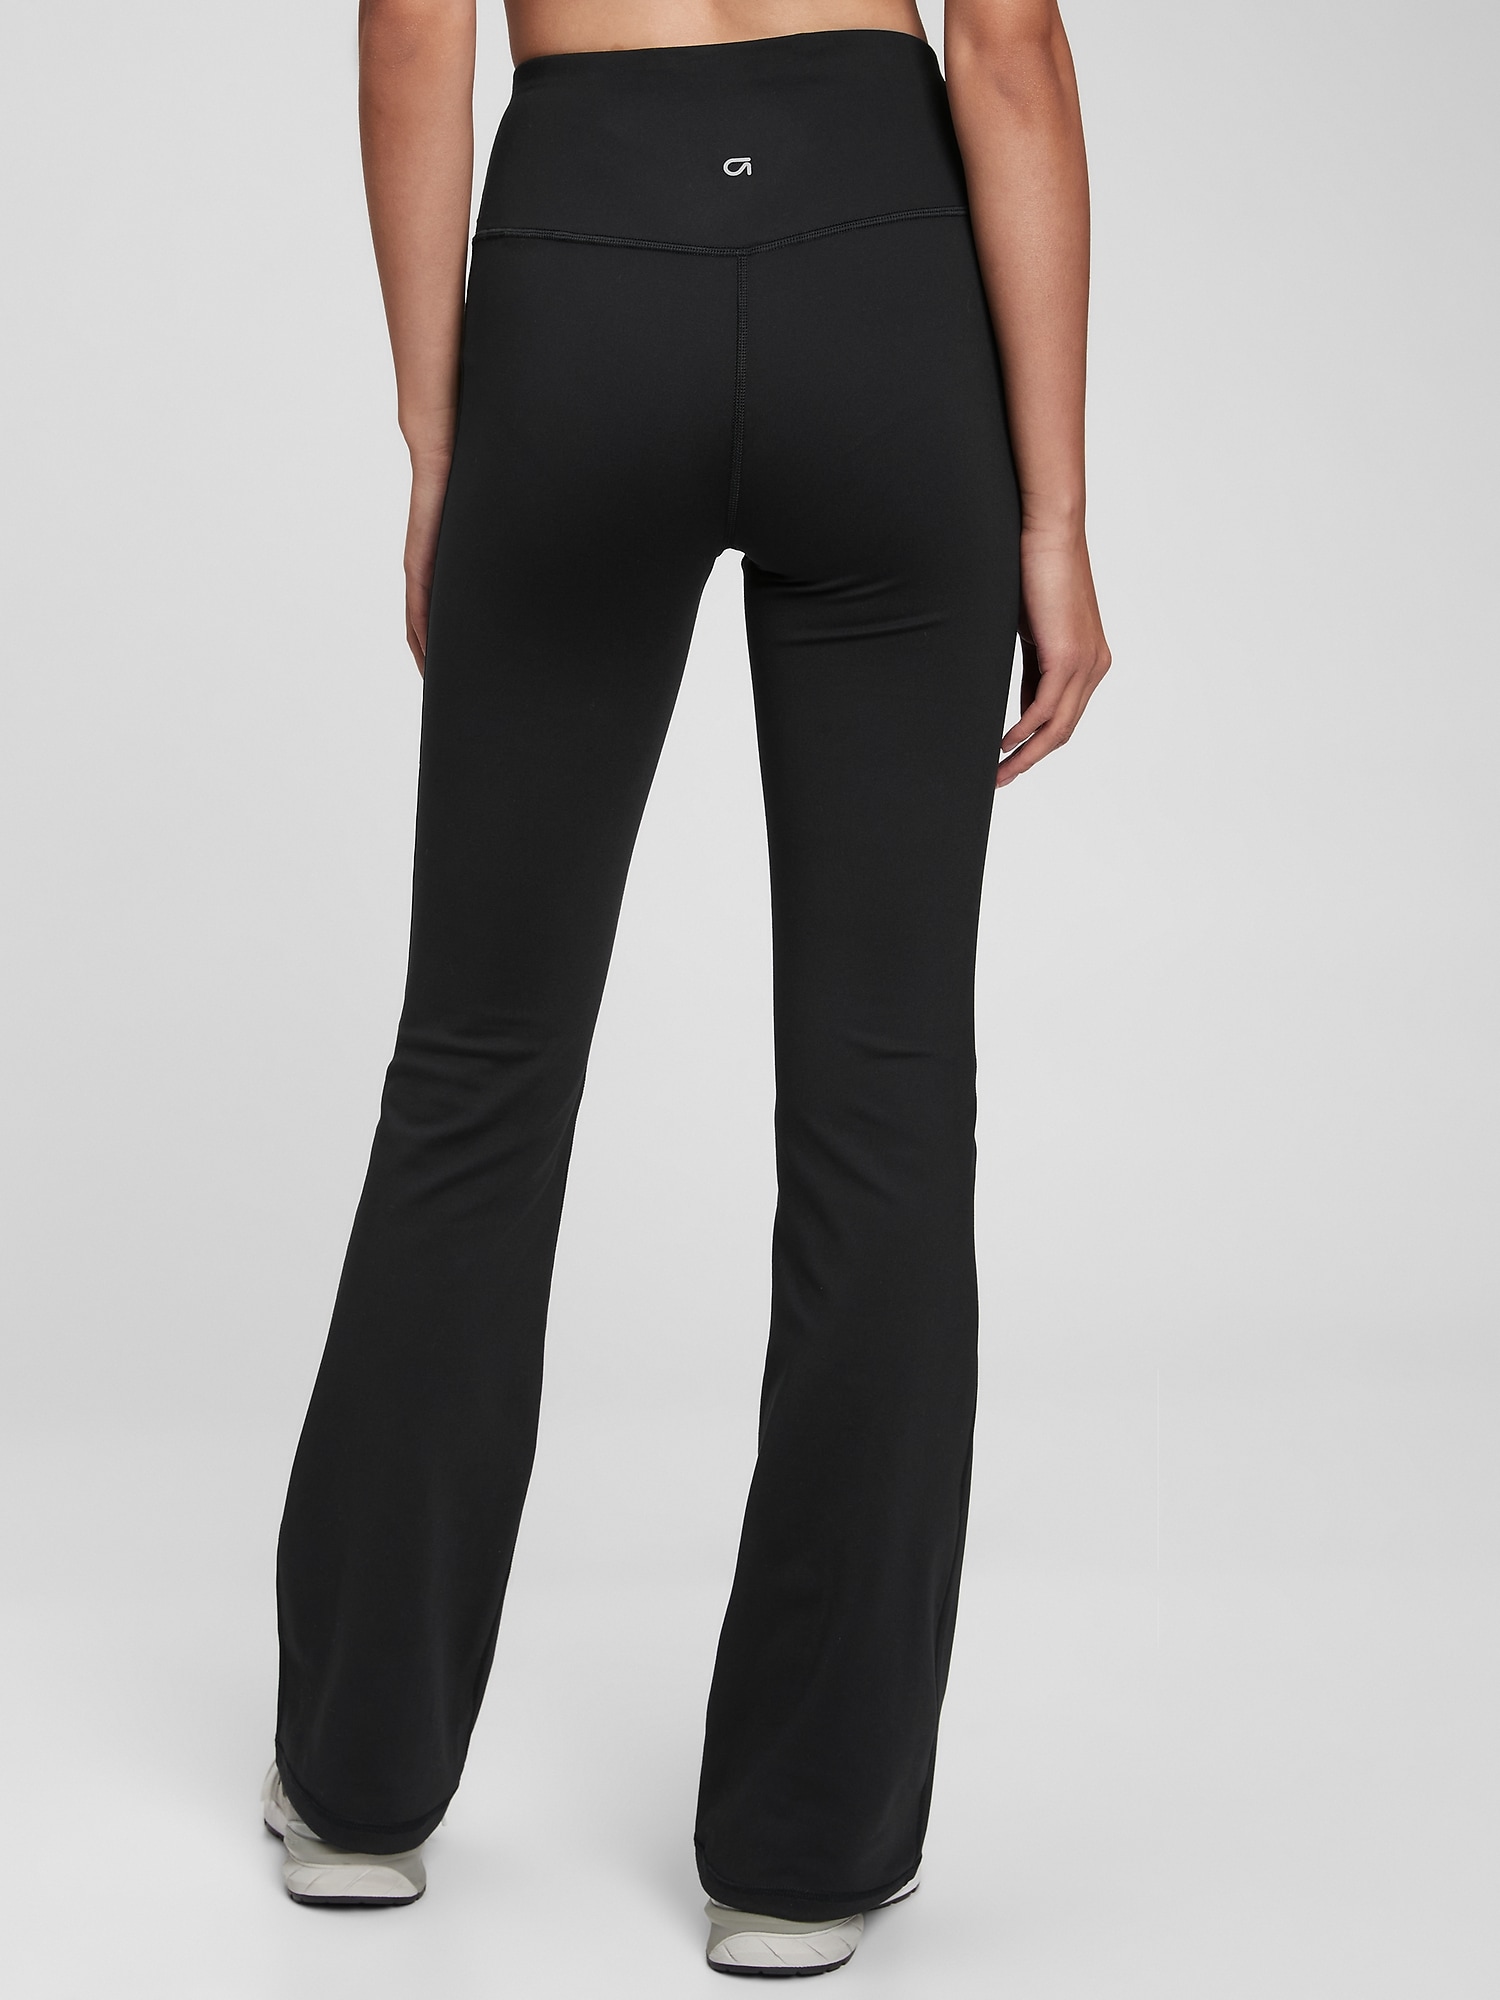 Podplug Yoga Pants Women, Fashion Women's High Waist Seamless Solid Color  Yoga Pants Running Fitness Pants (Size:L) 